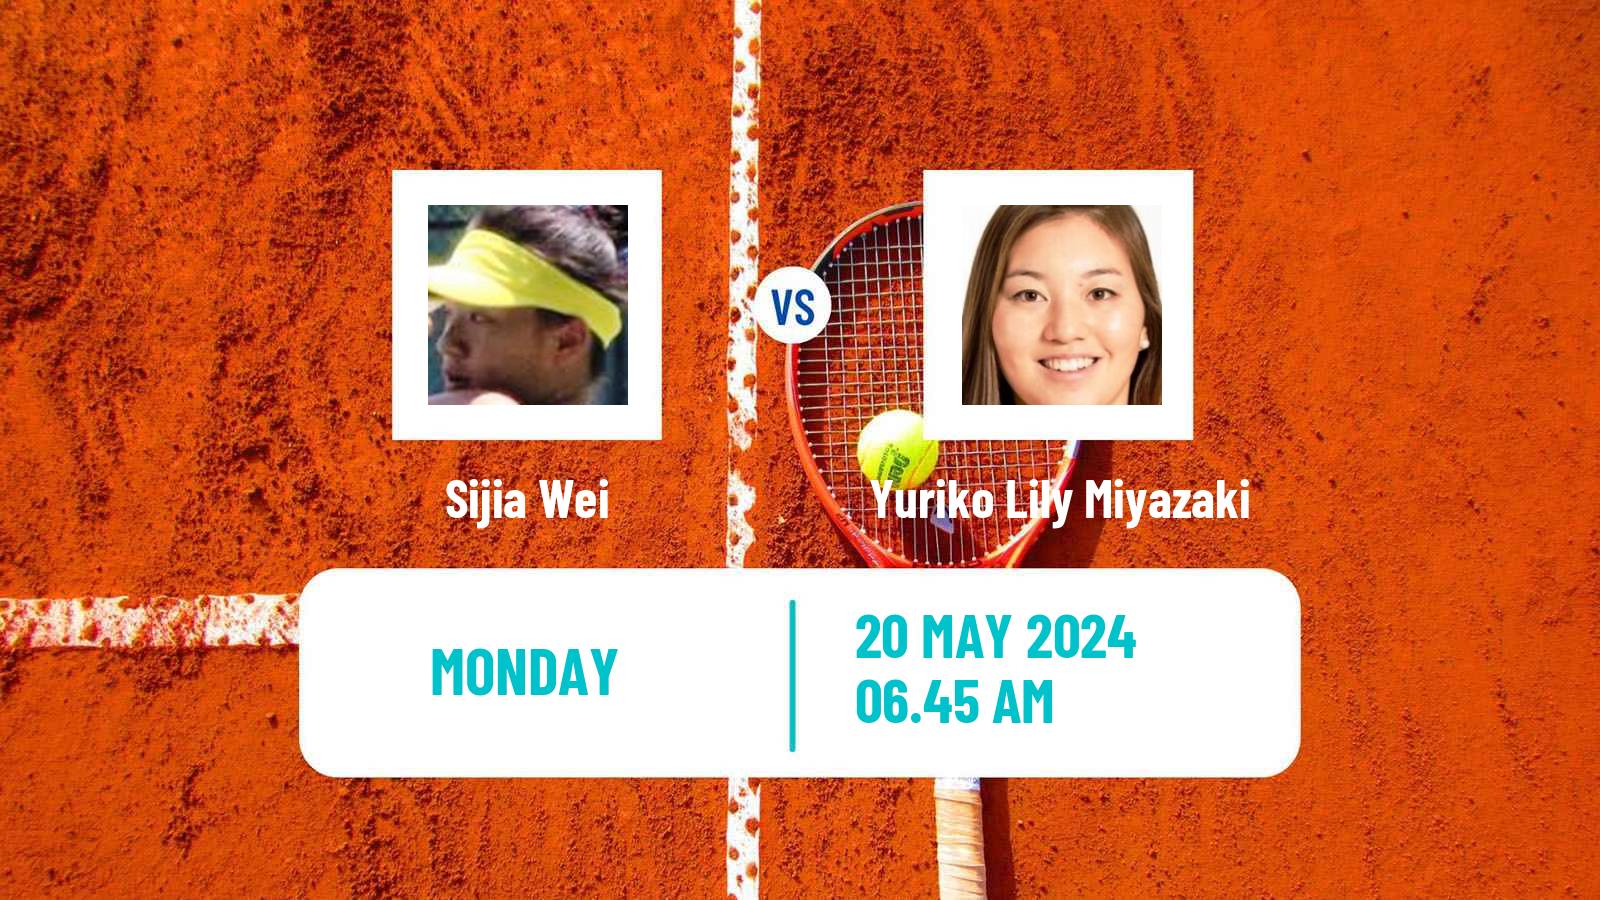 Tennis WTA Roland Garros Sijia Wei - Yuriko Lily Miyazaki